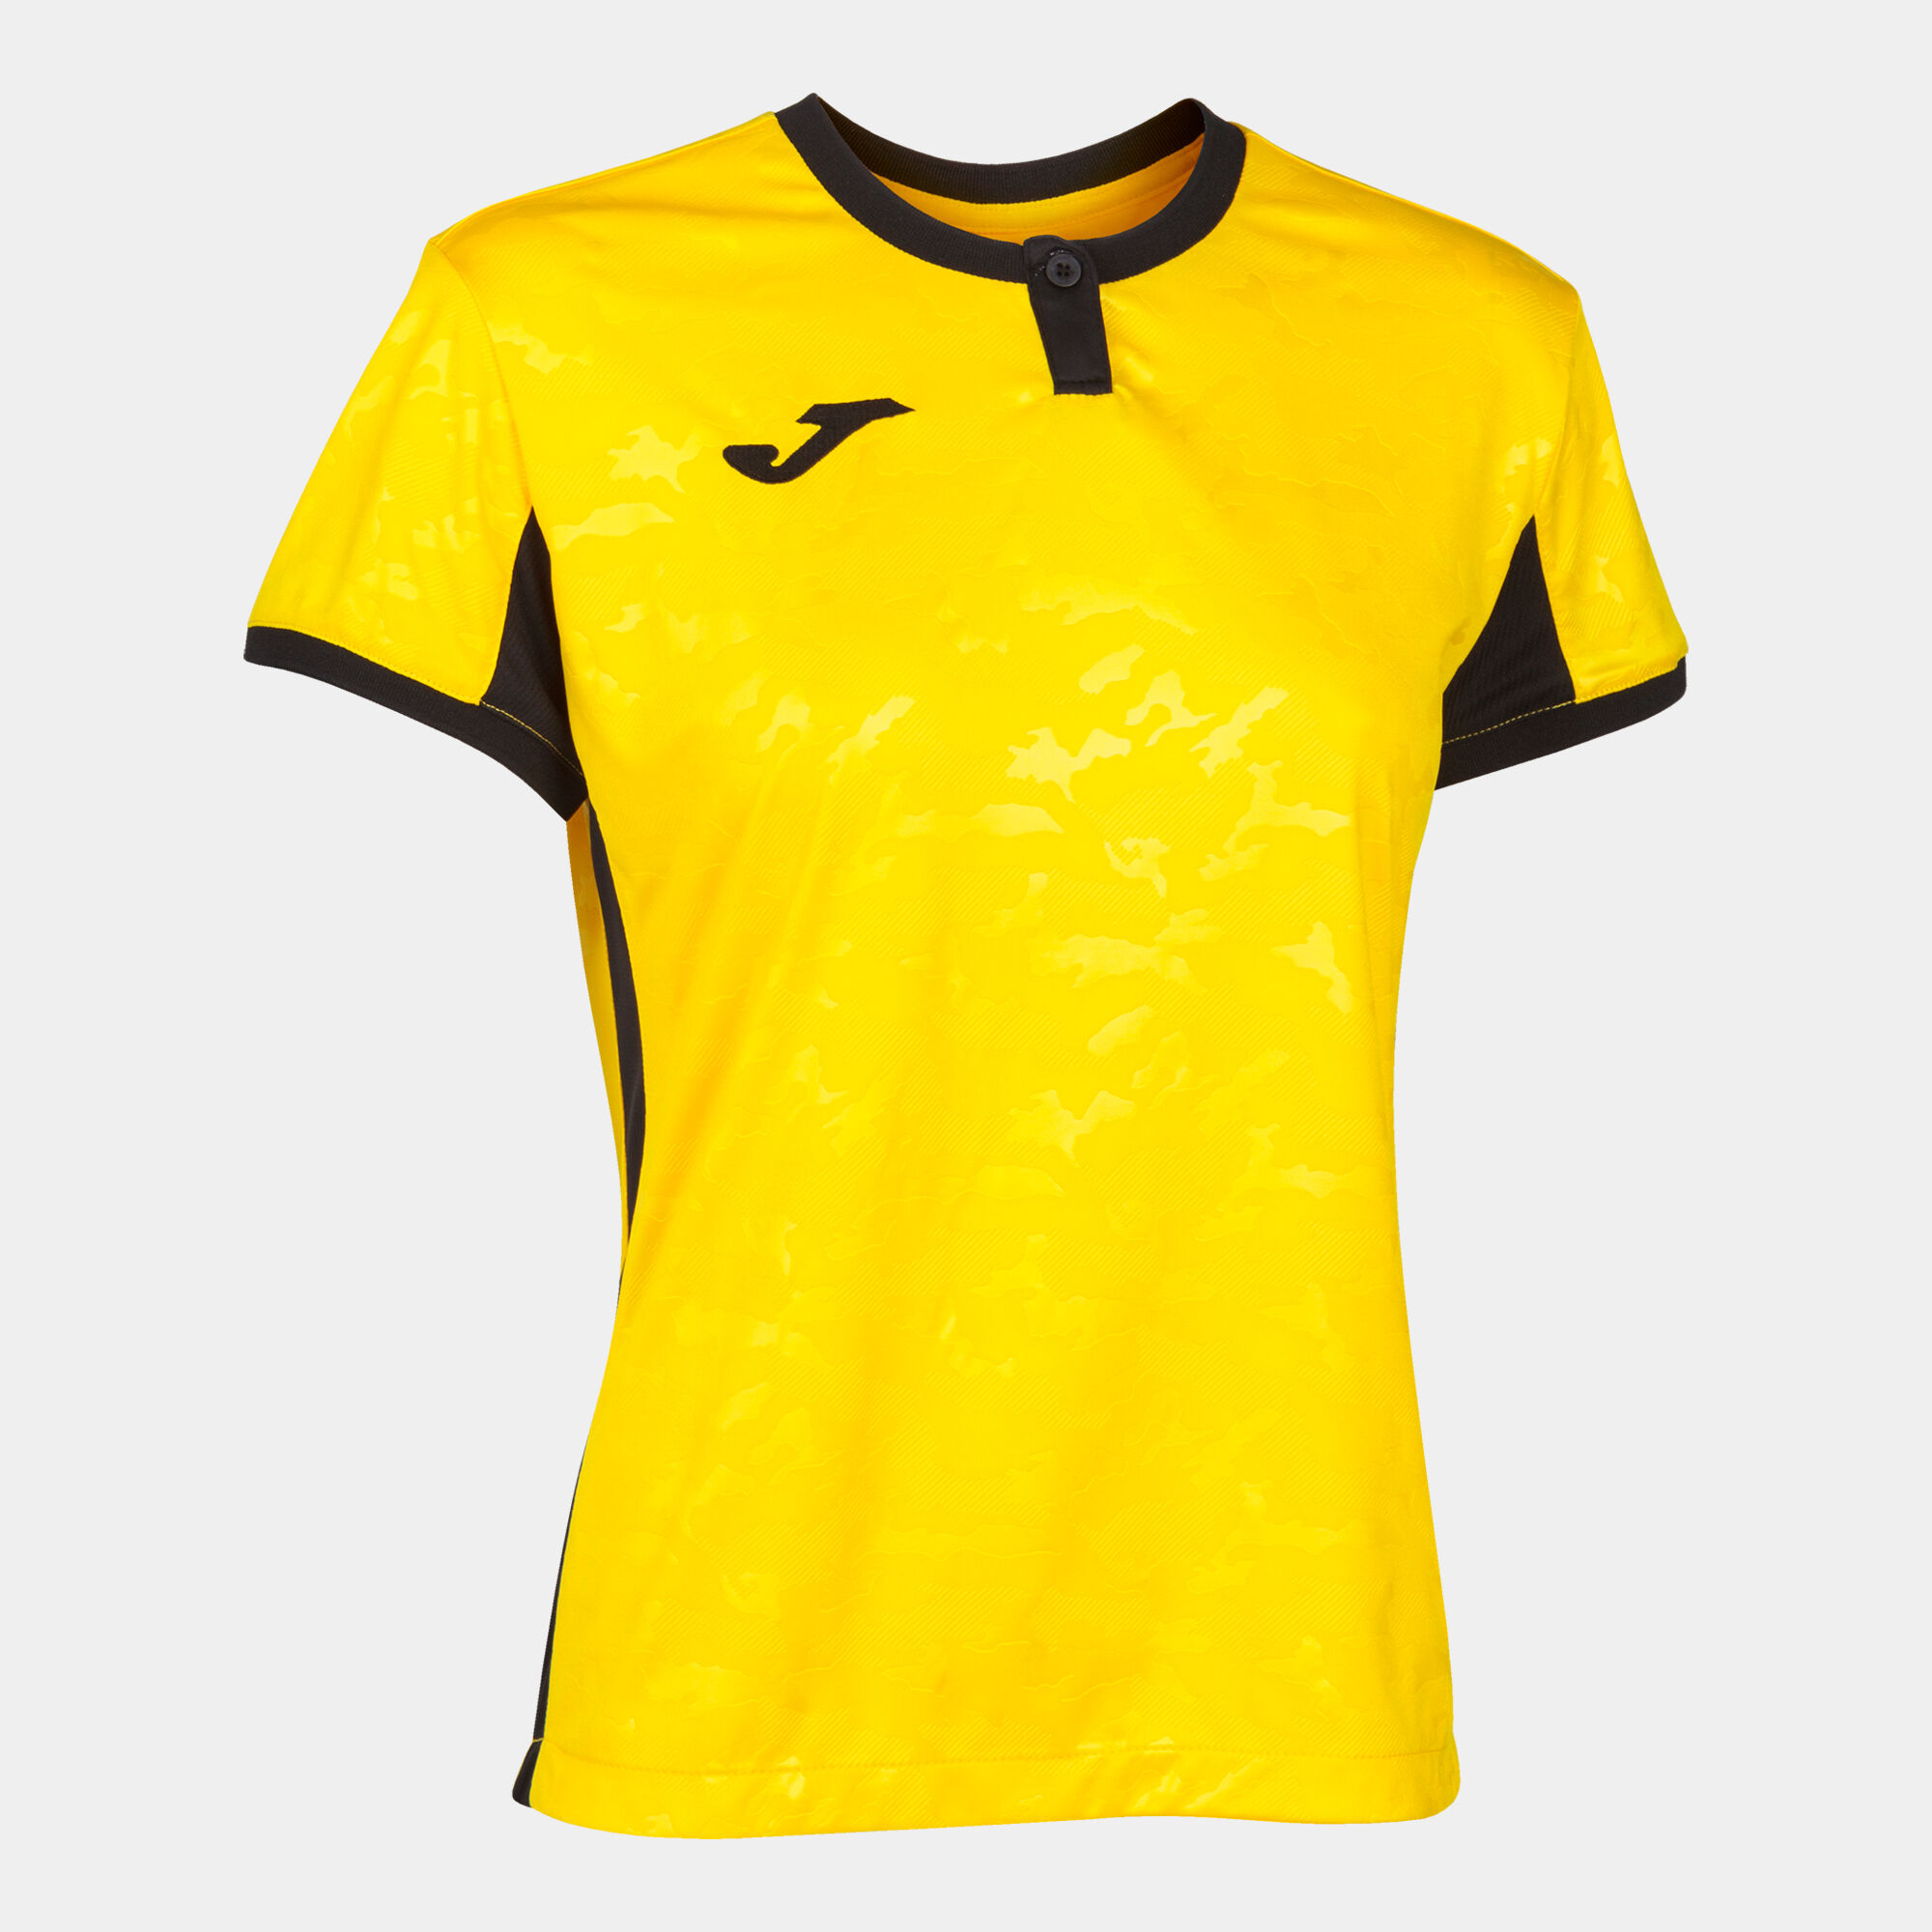 Camiseta manga corta mujer Toletum II amarillo negro